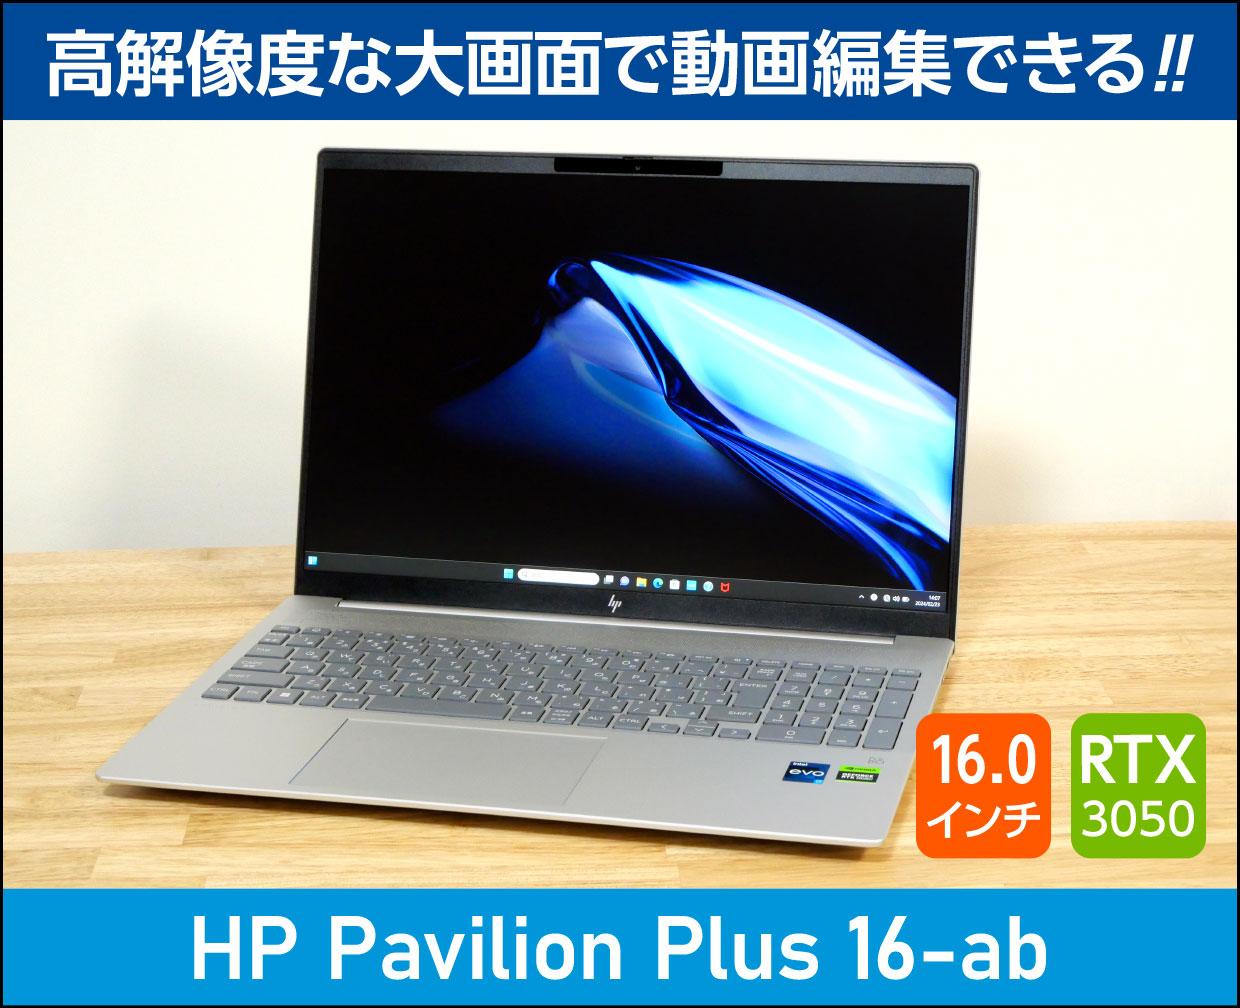 HP Pavilion Plus 16-abのメイン画像